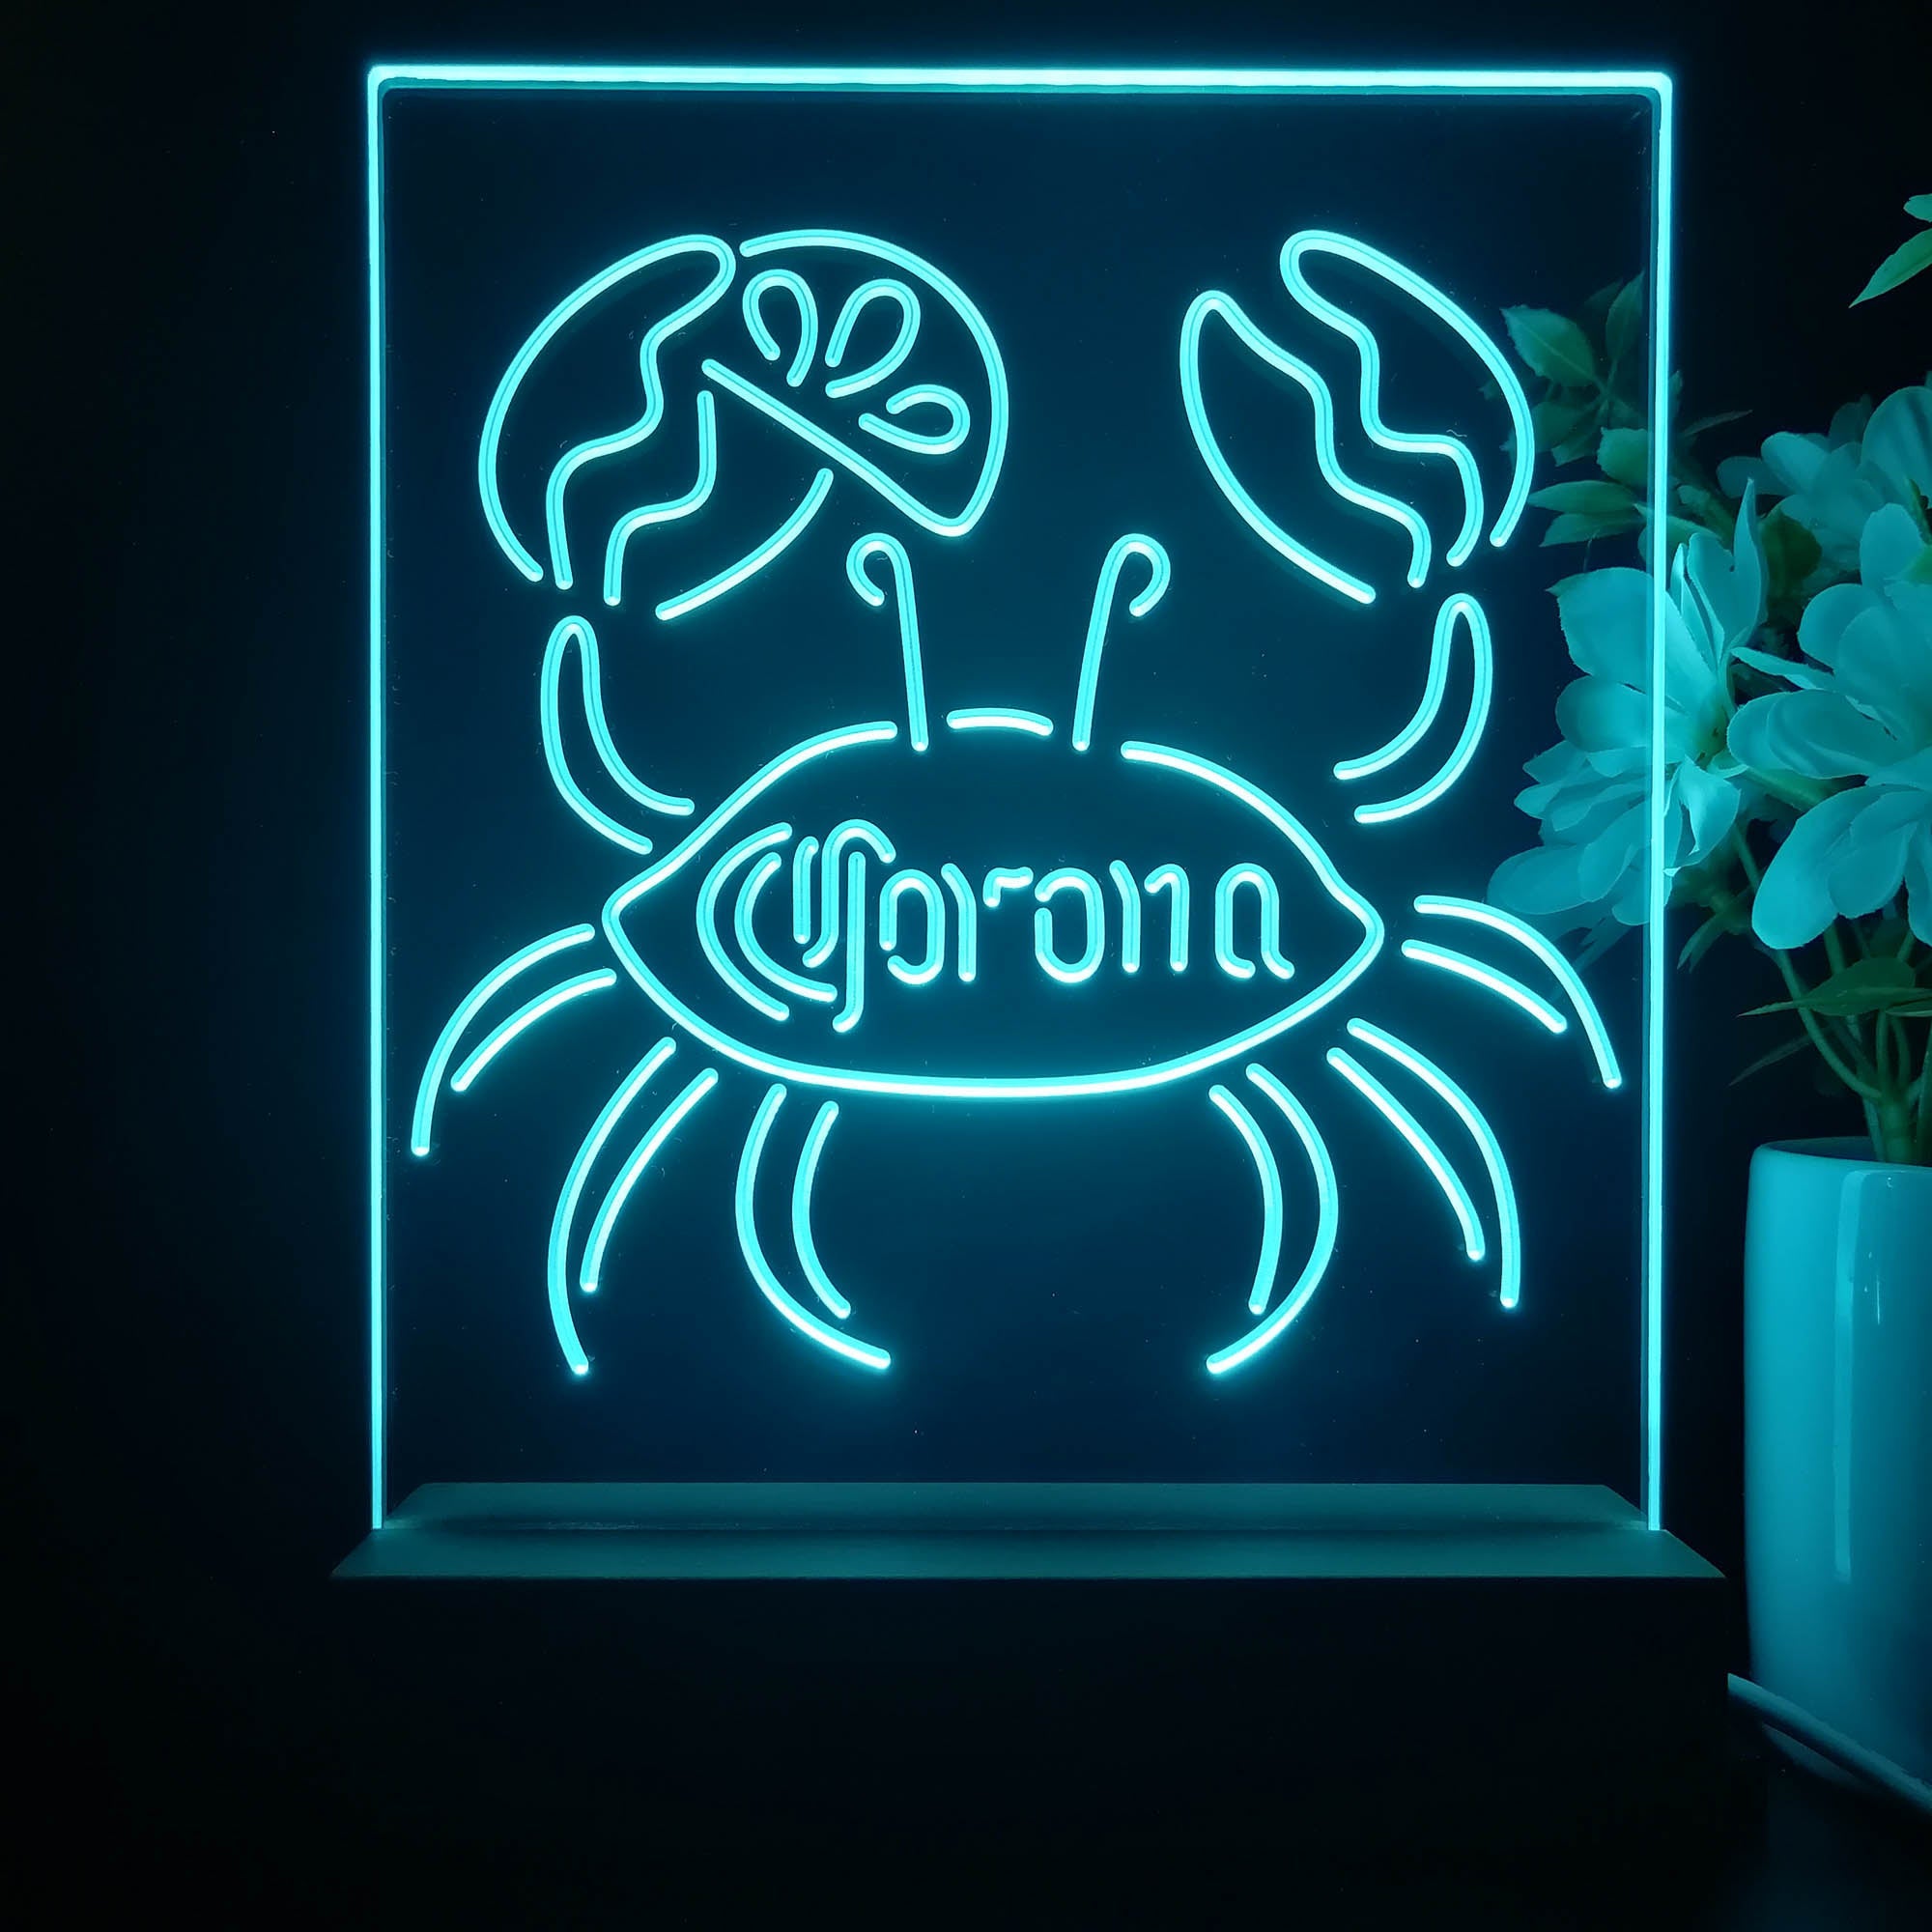 Corona Crab Lime Lemon Beer 3D Illusion Night Light Desk Lamp